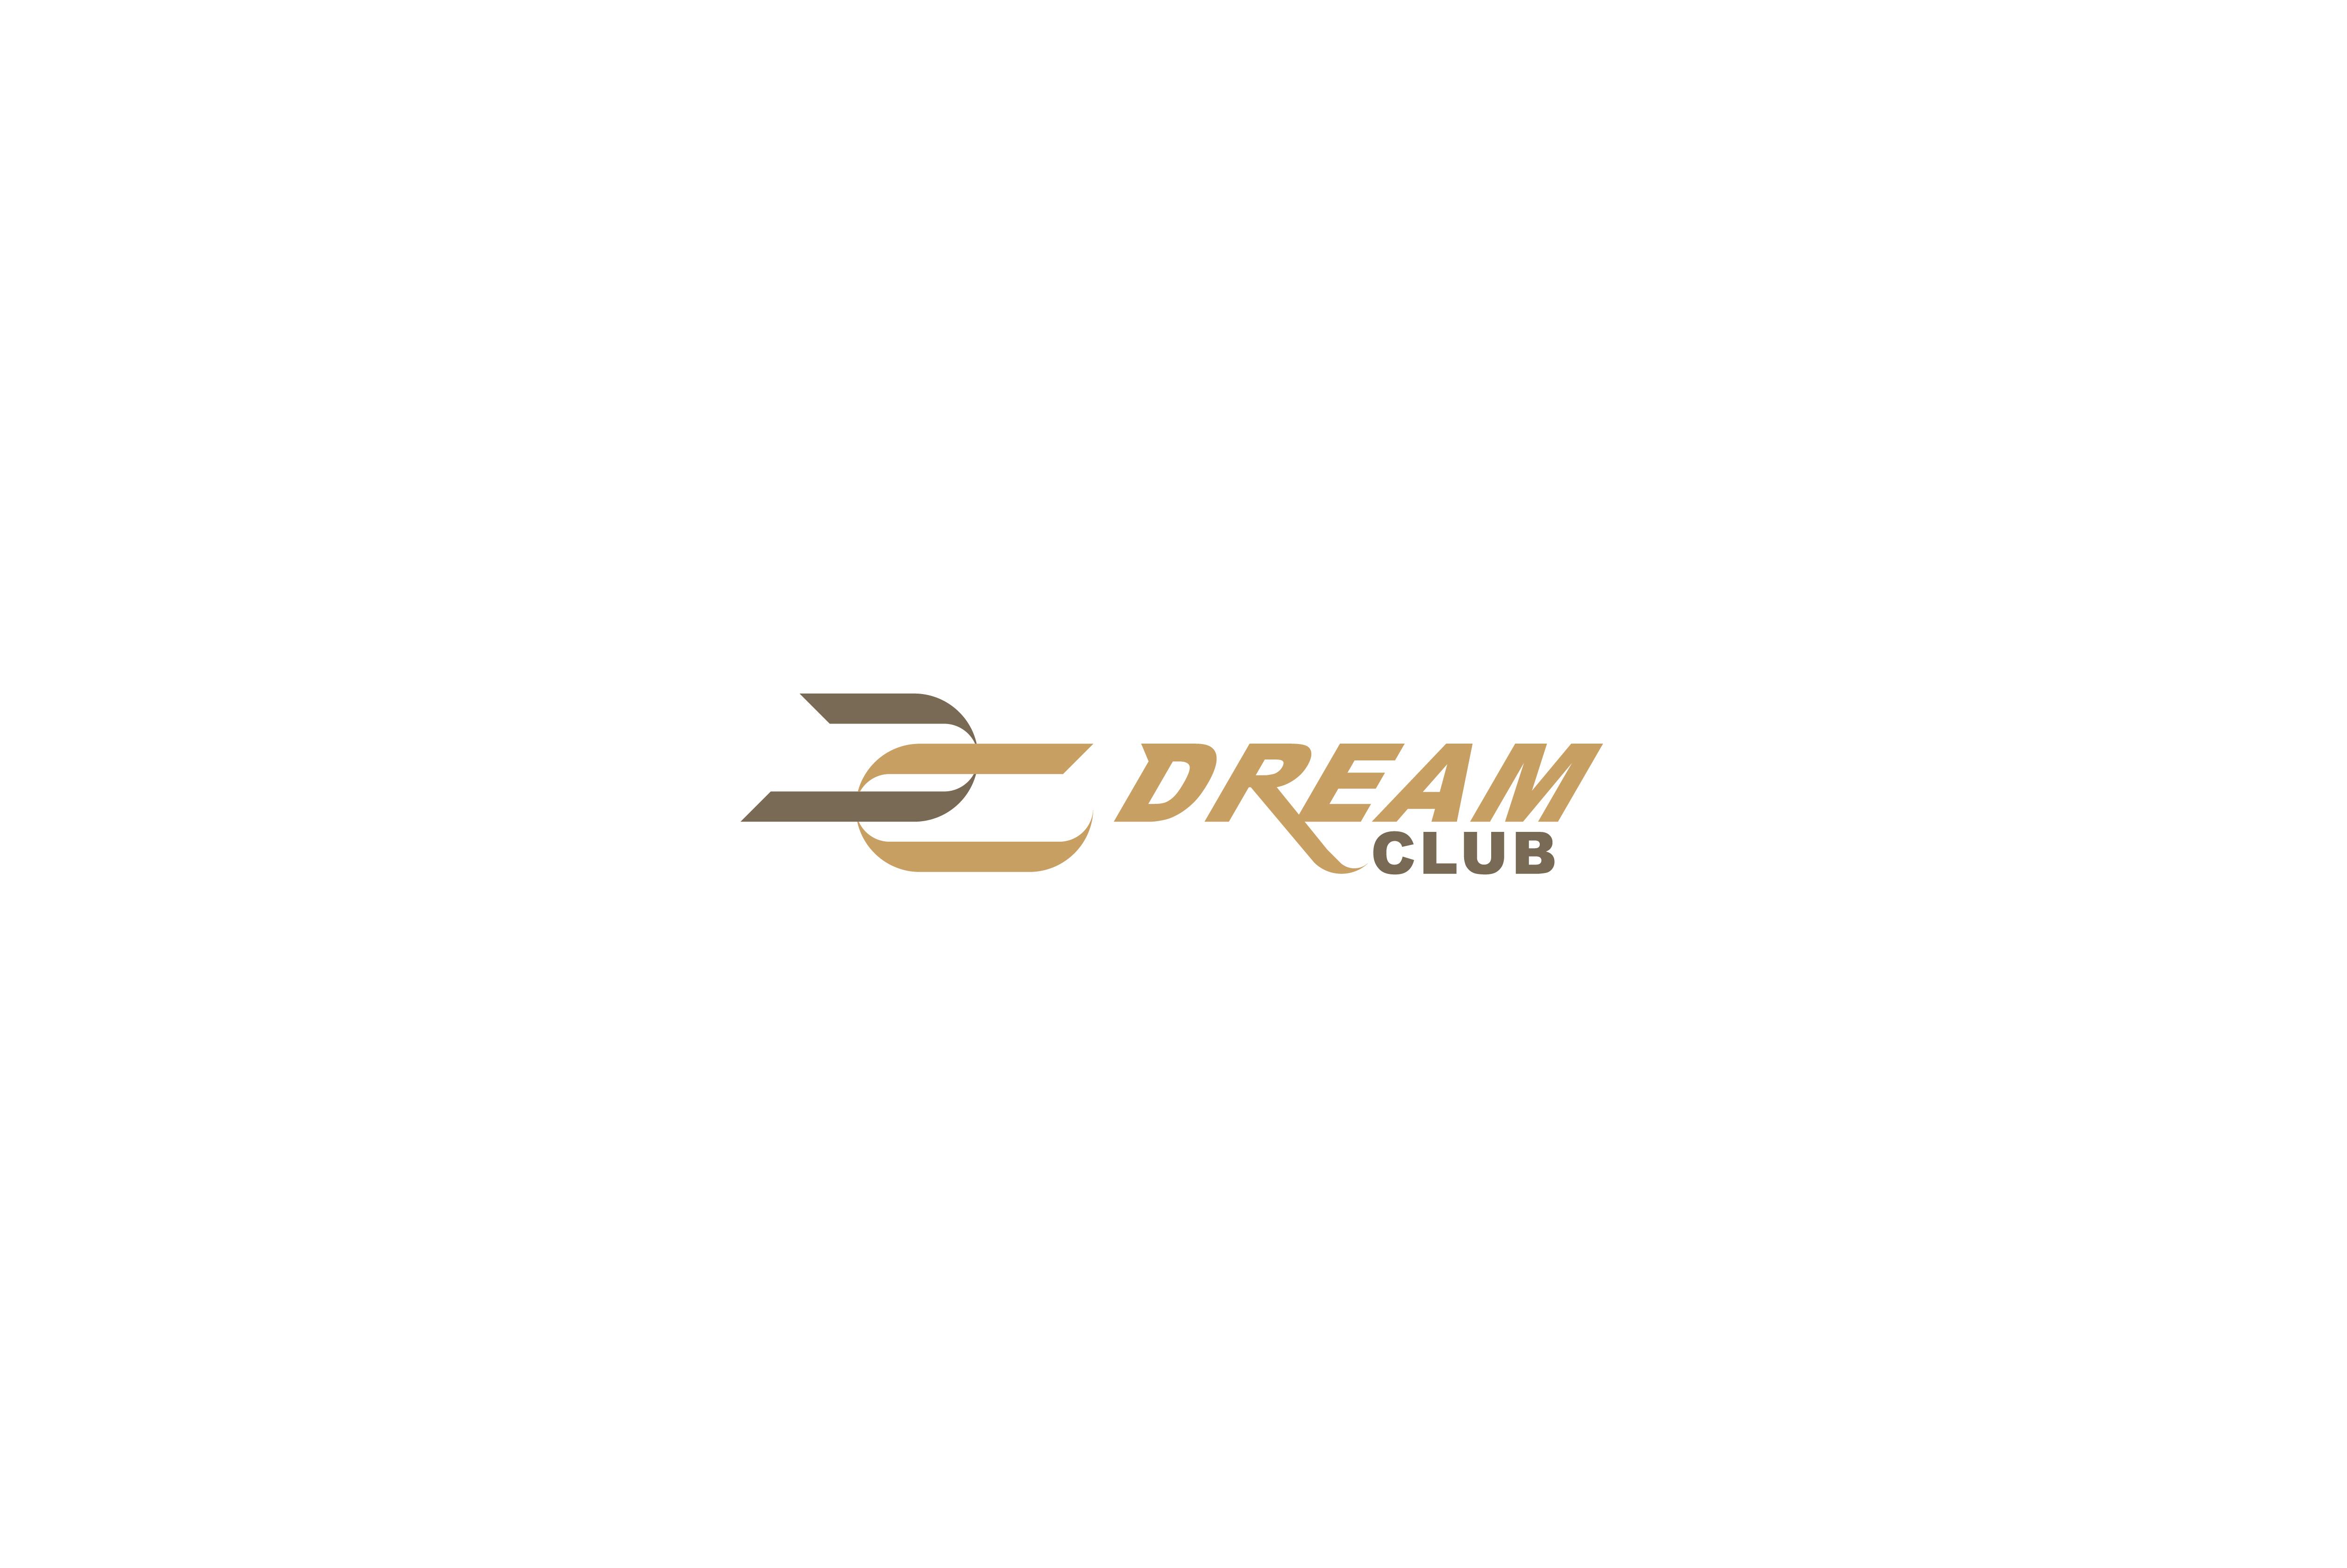 Dream Club-團體形象識別